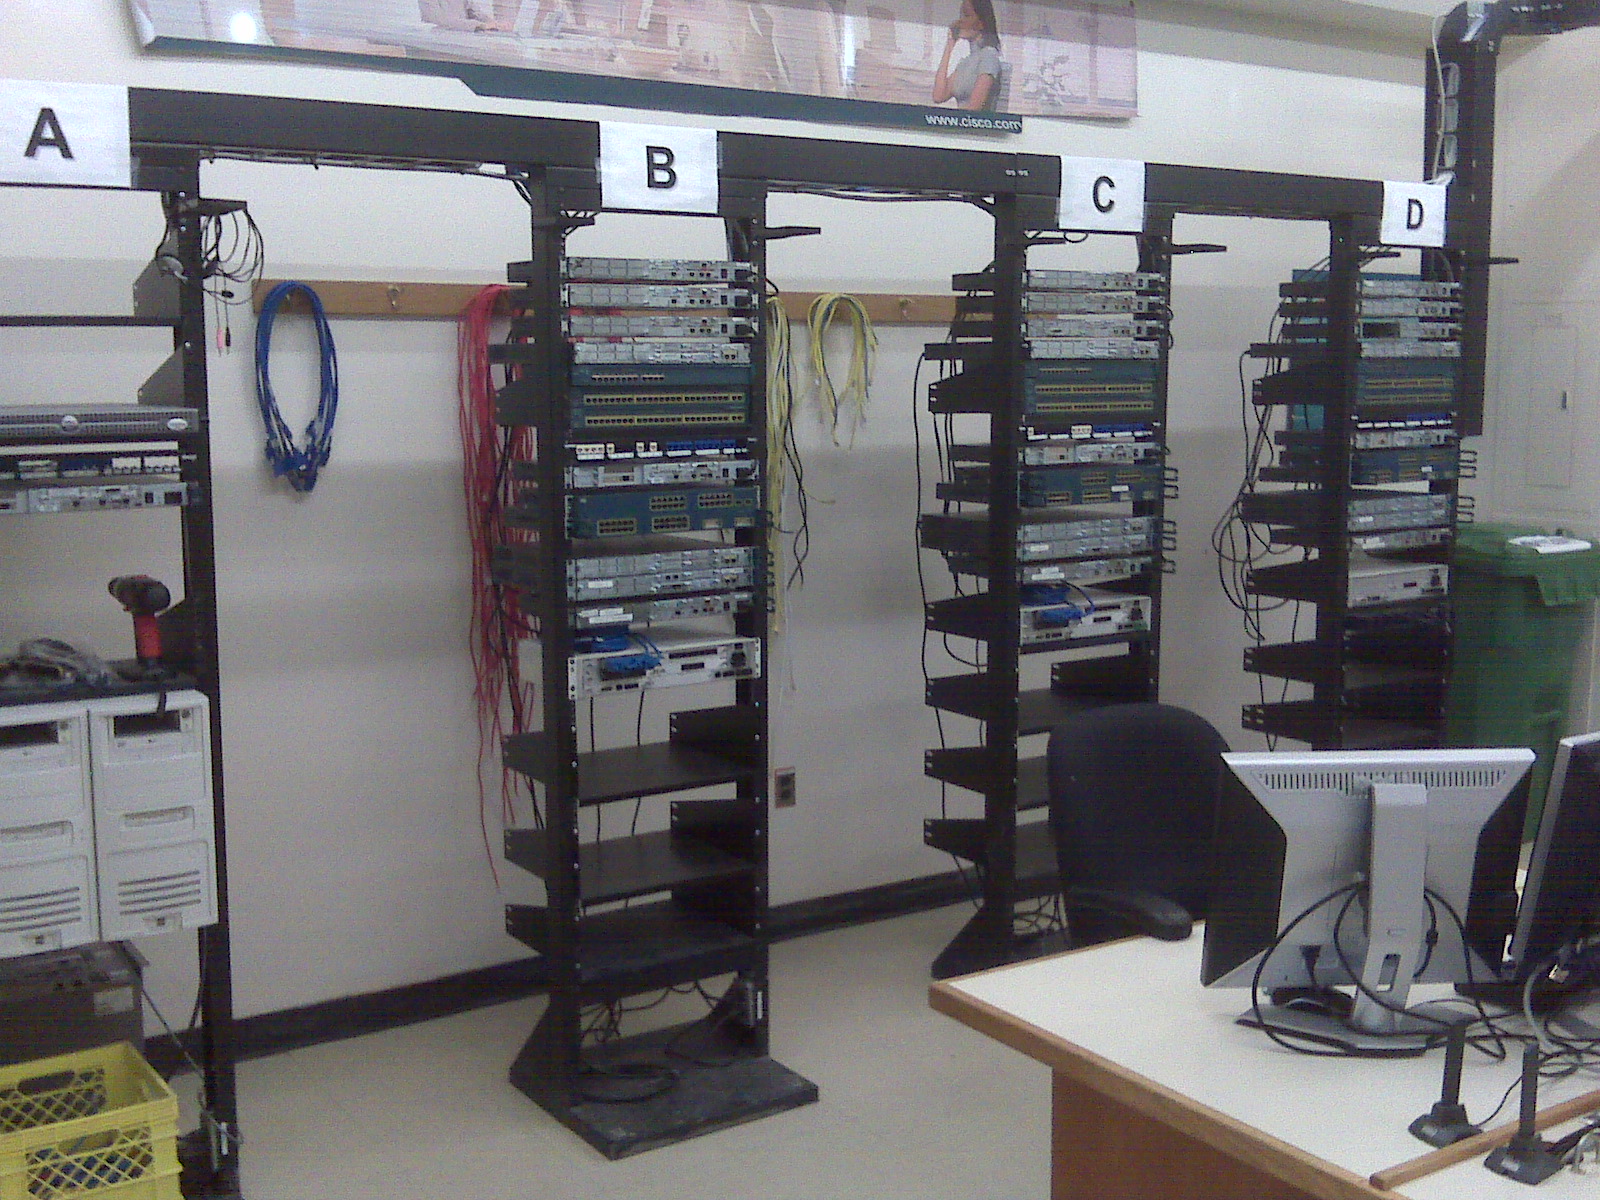 Cisco classroom network racks and hardware.